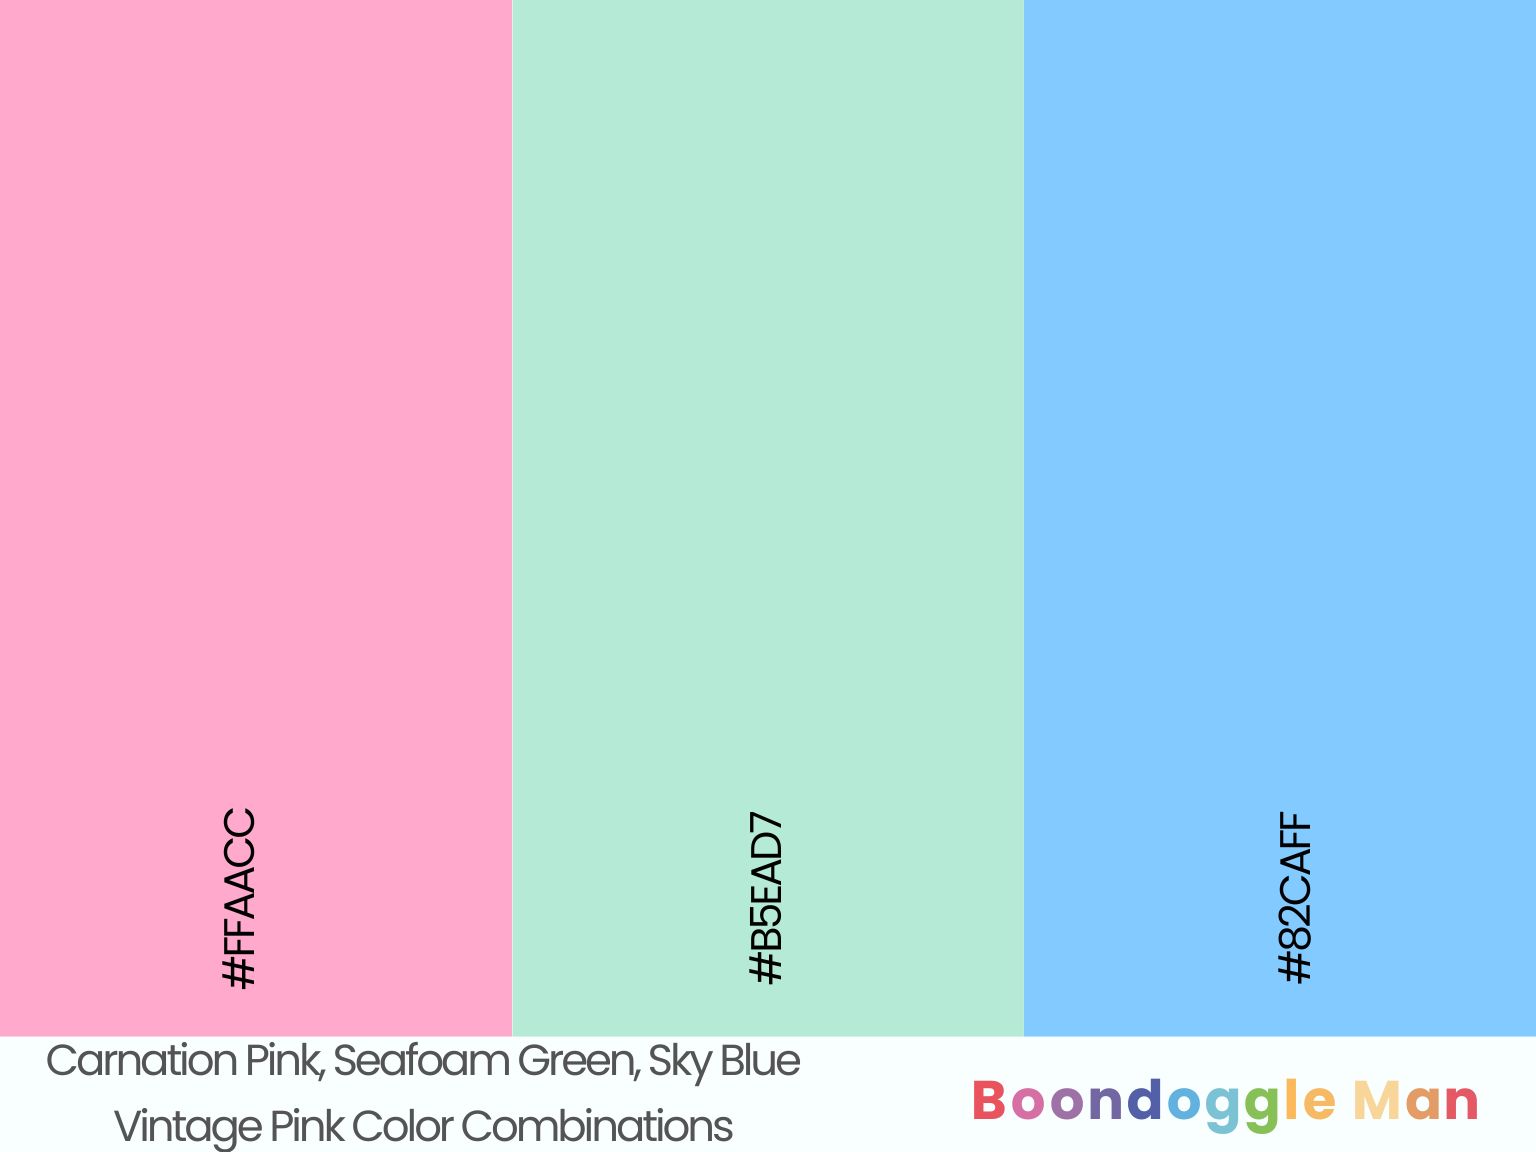 Carnation Pink, Seafoam Green, Sky Blue